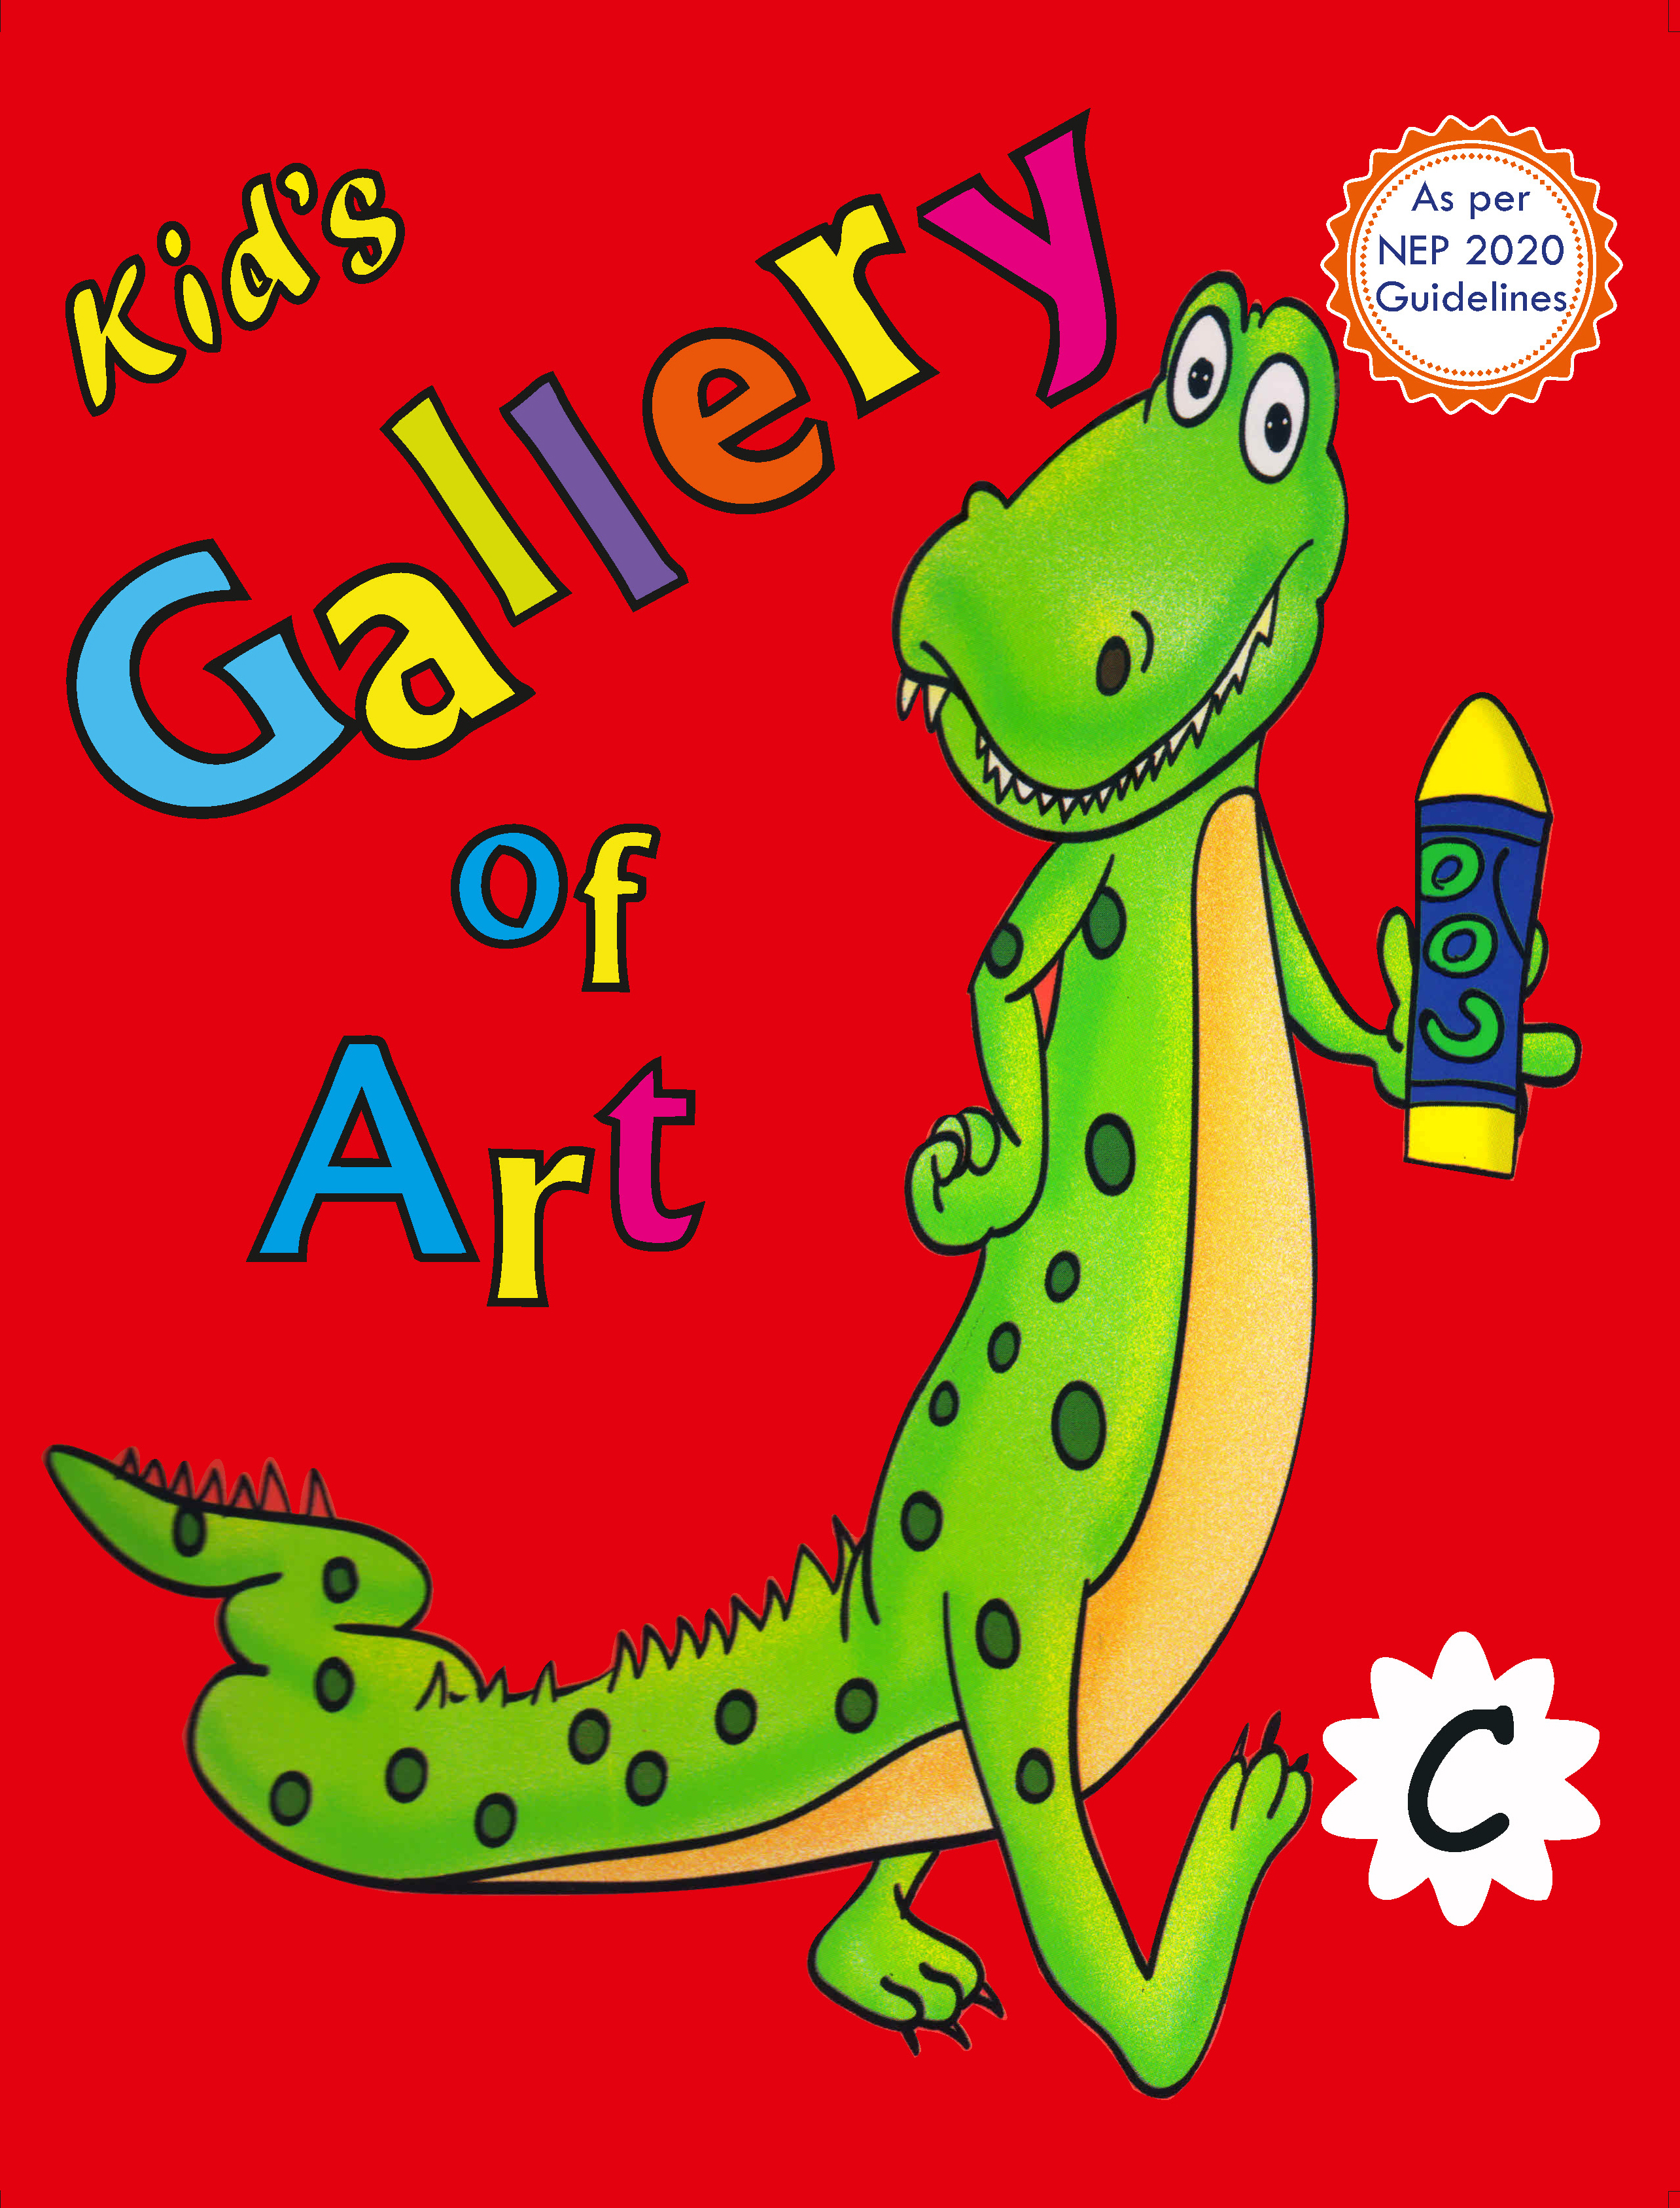 KID'S GALLERY OF ART C